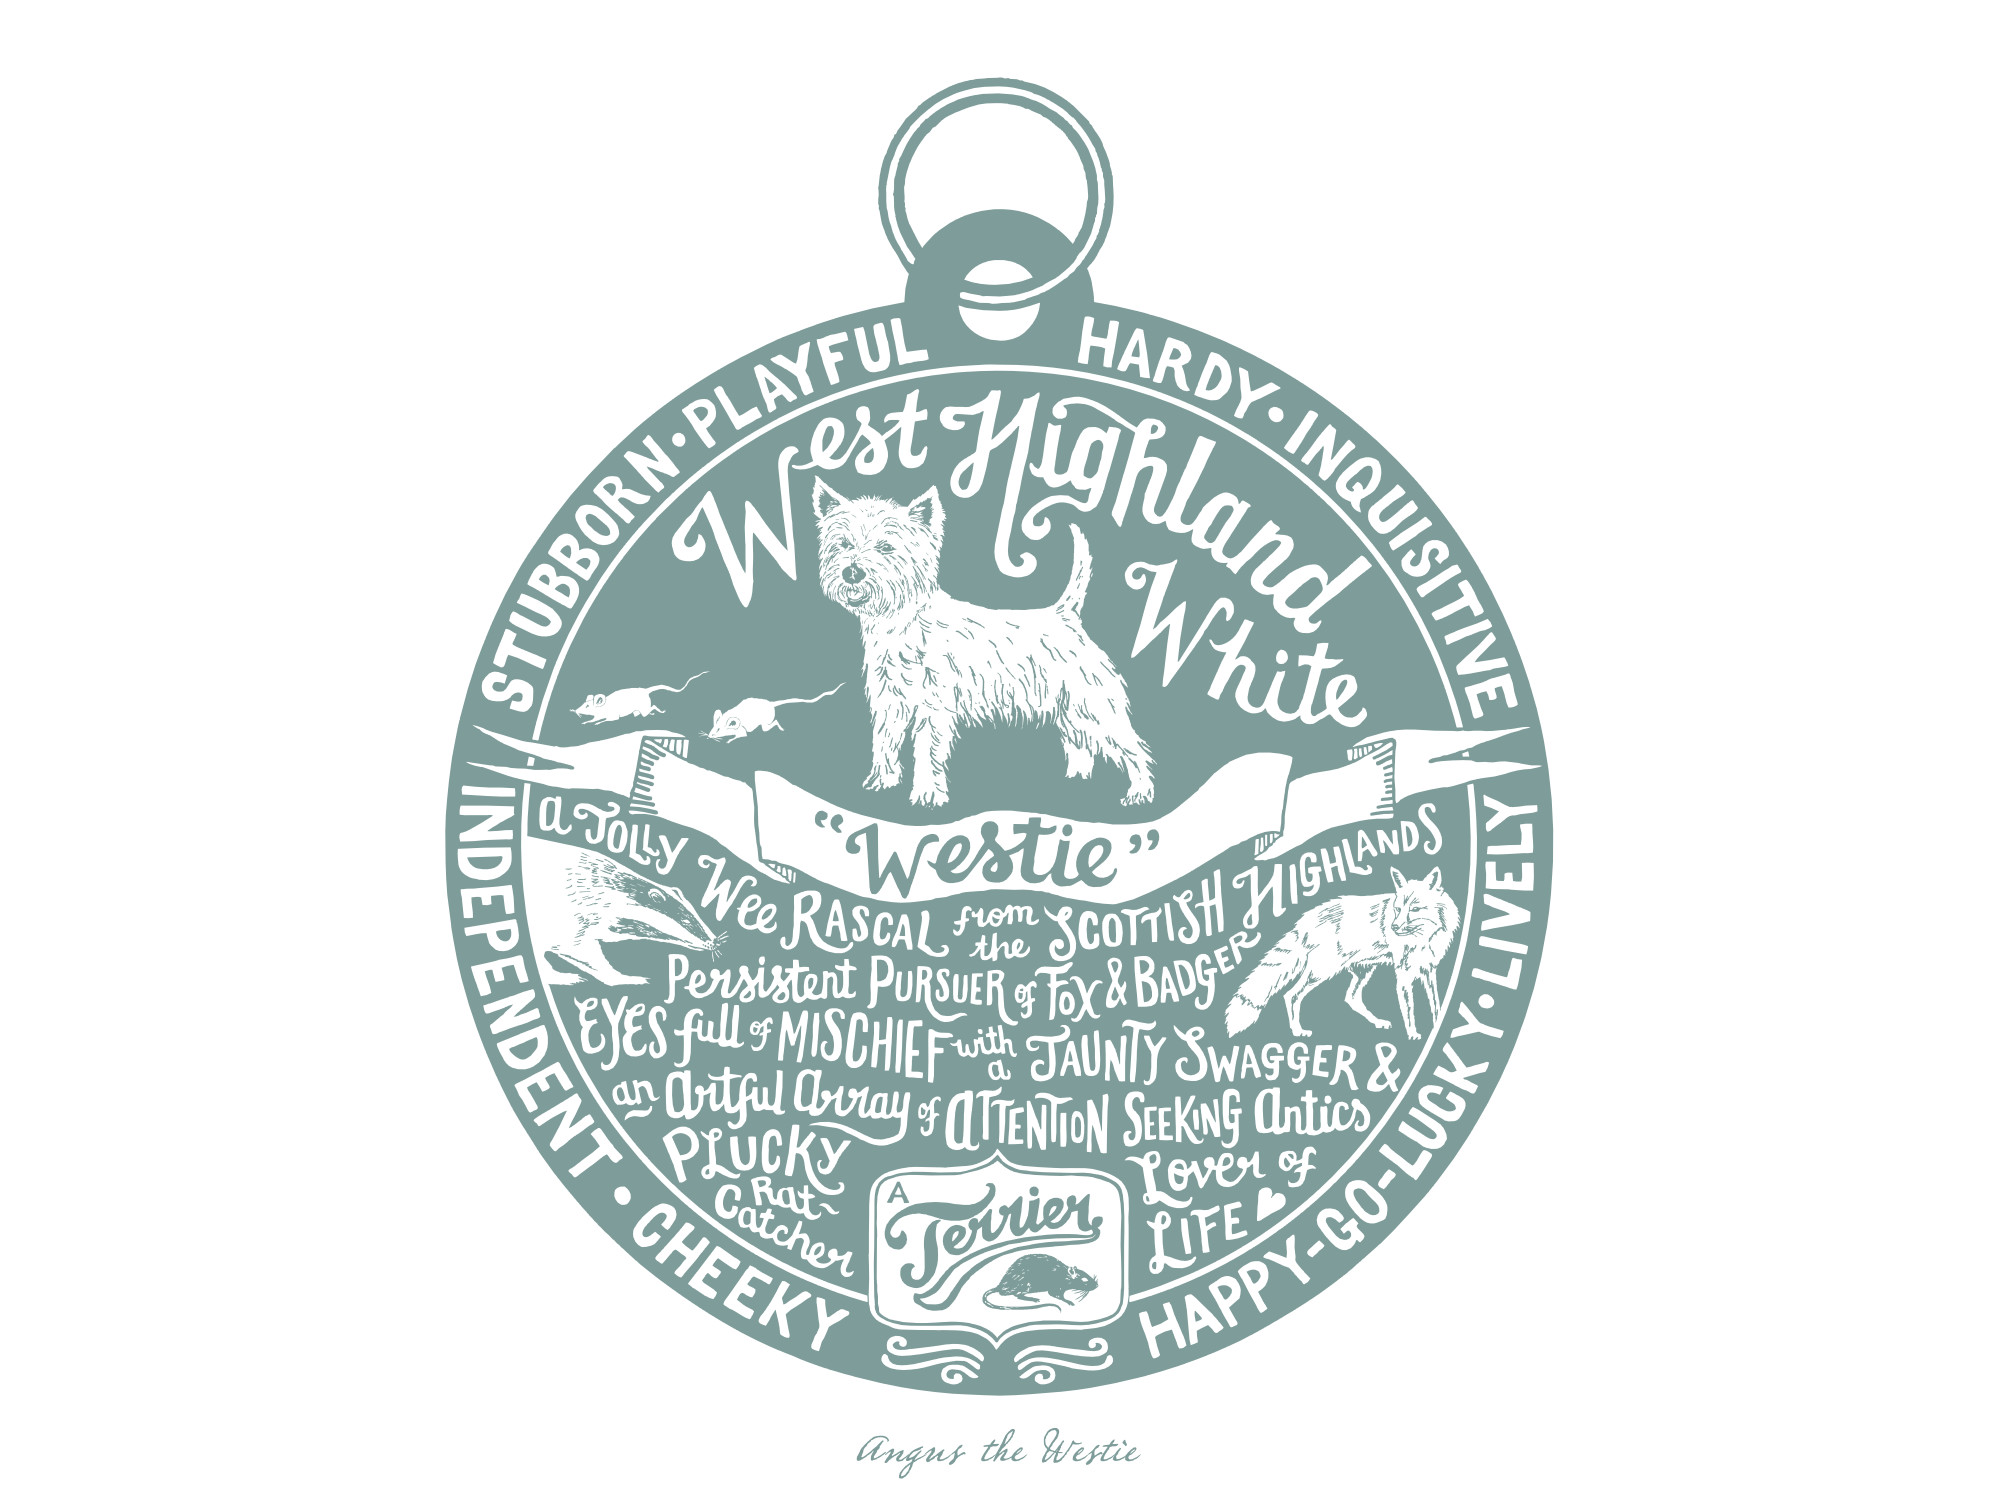 West Highland White Terrier Print Unframed | The Enlightened Hound